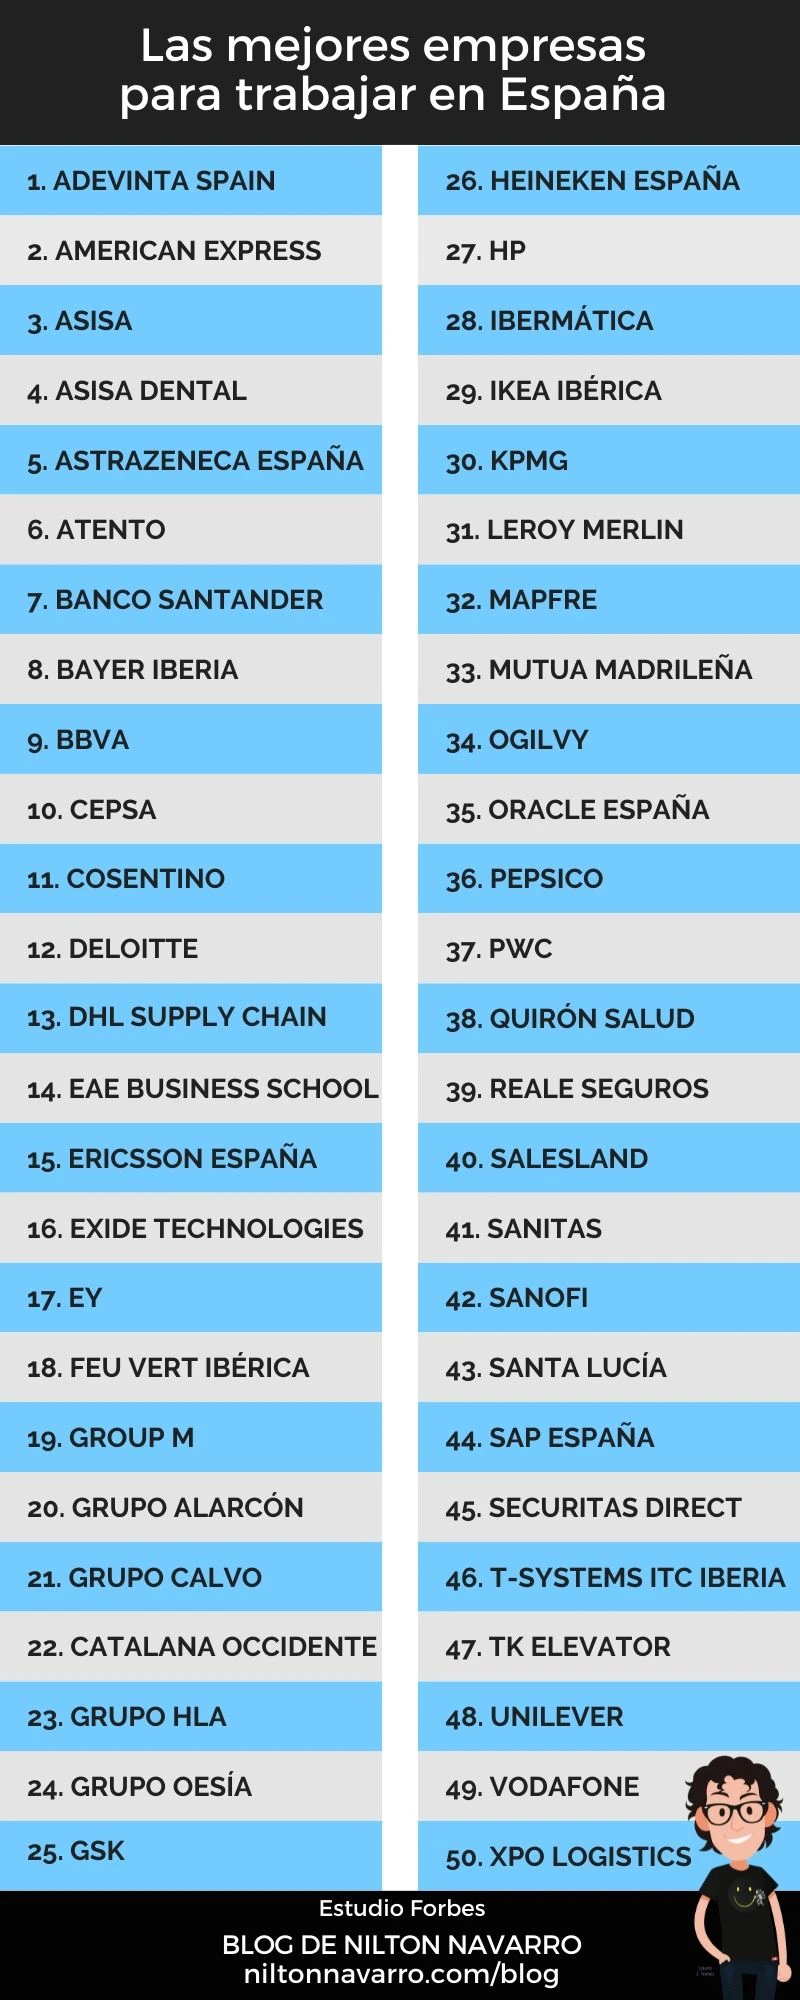 50 mejores empresas para trabajar en España #infografia #infographic #rrhh #EmployerBranding